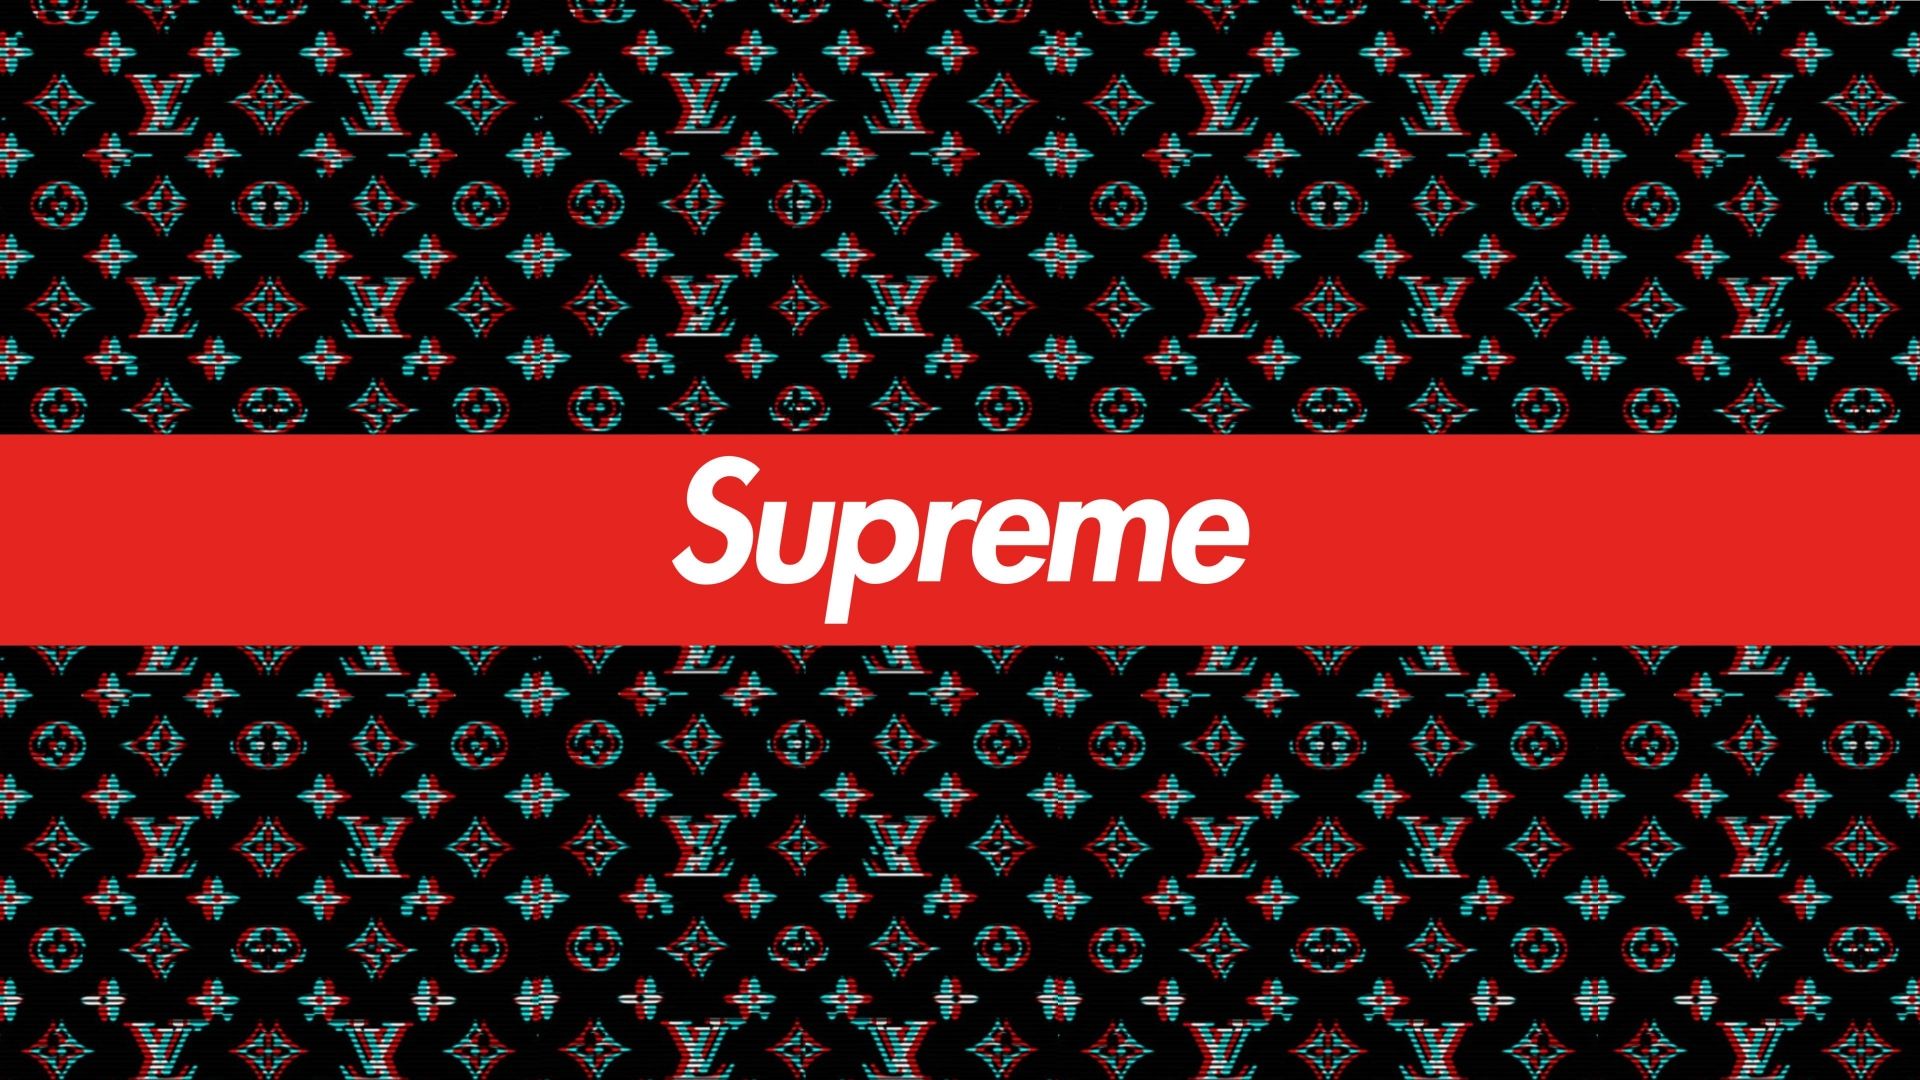 Free download Supreme Brand Wallpaper Top Supreme Brand